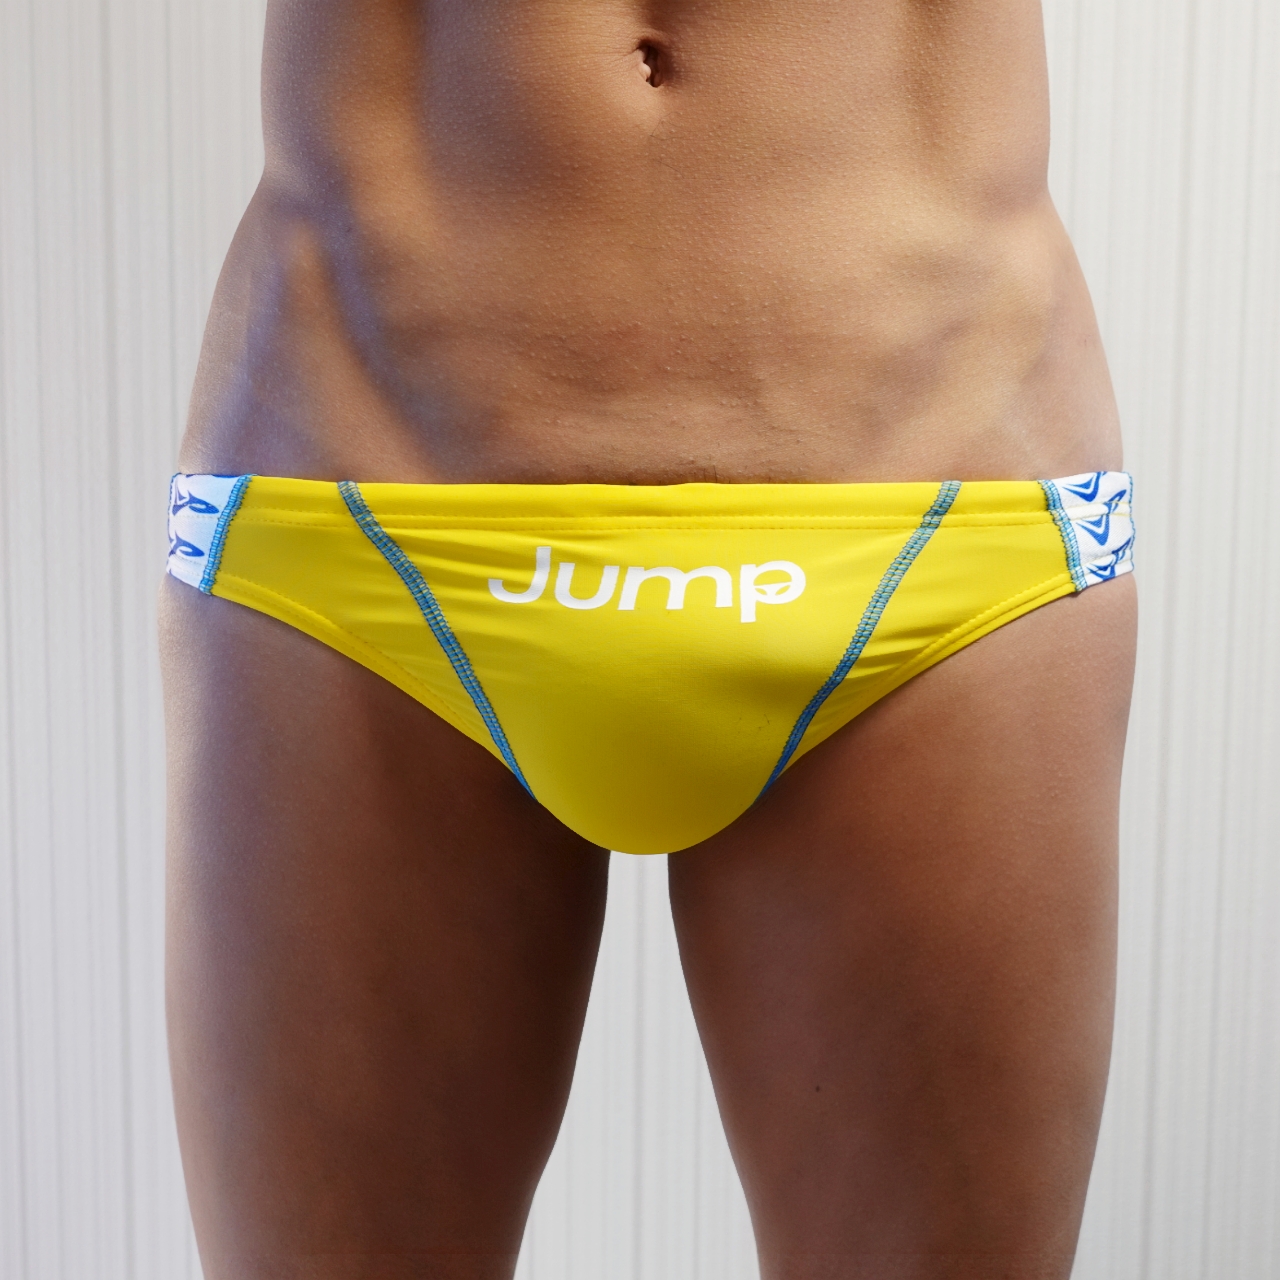 JUMP ONLINE STORE / JUMP メンズ競泳水着 SIDE-LOGO パプリカイエロー 